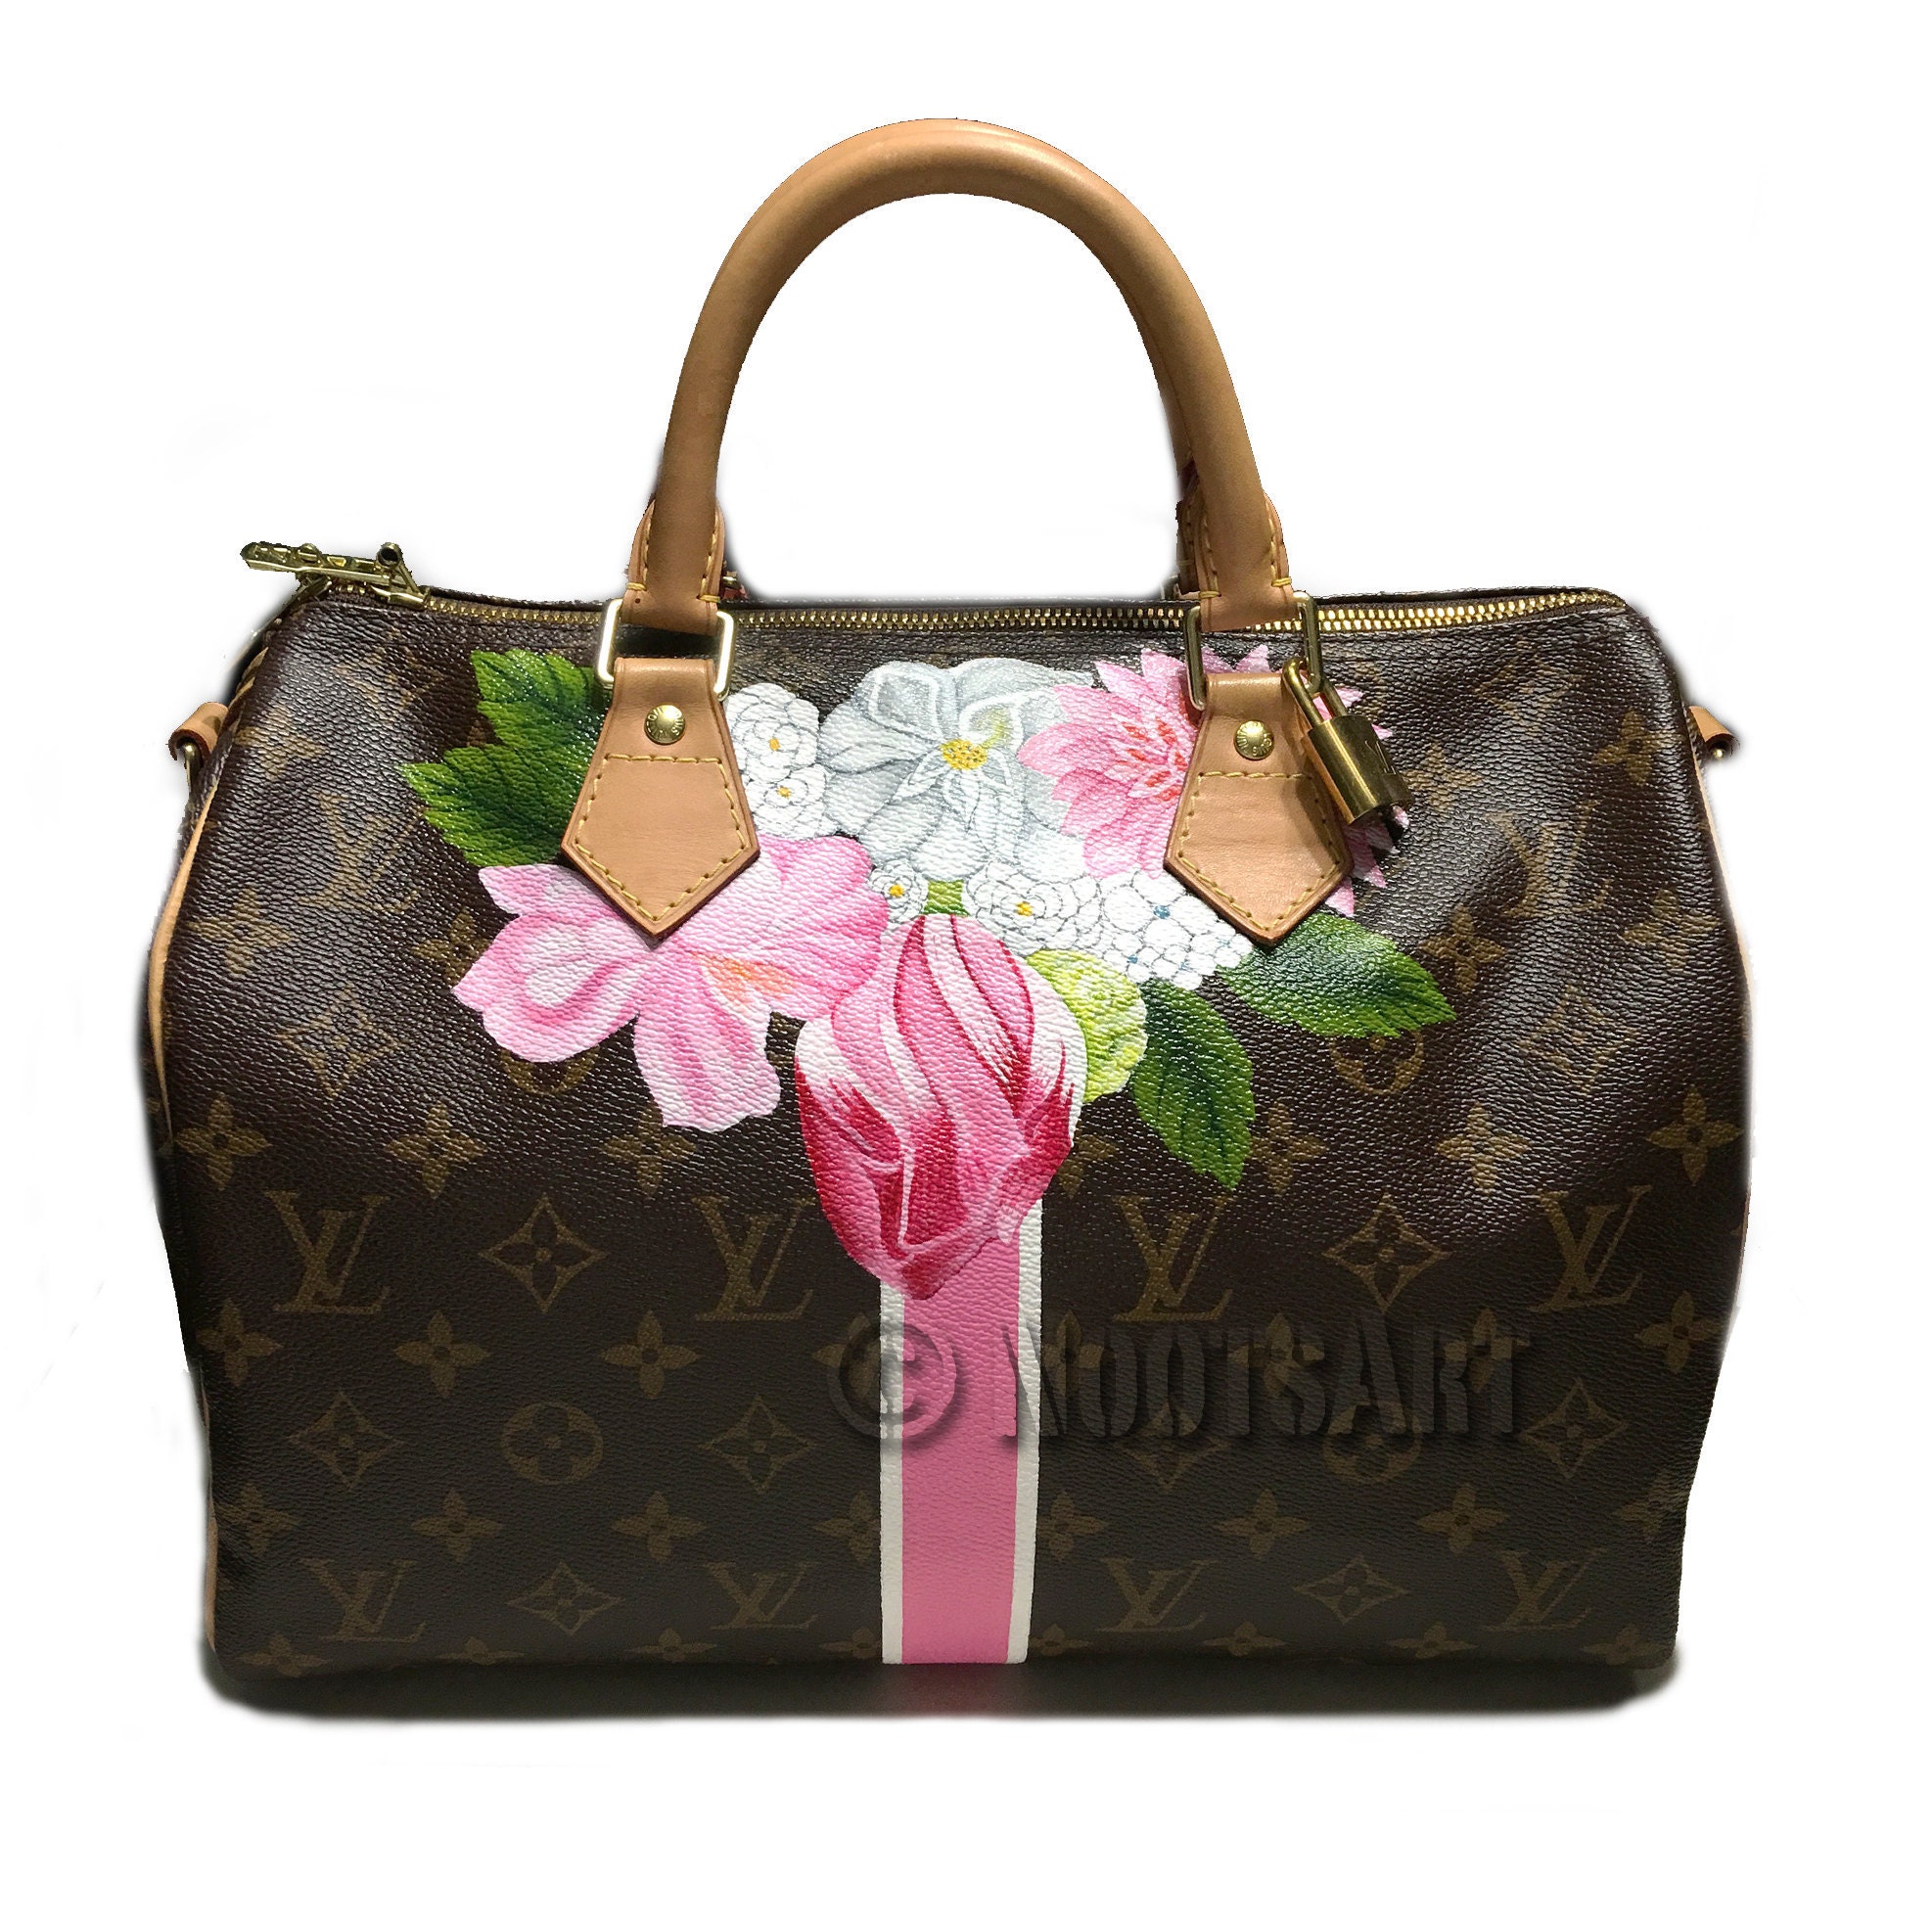 Custom hand painted Louis Vuitton bag...Monogram...Customer